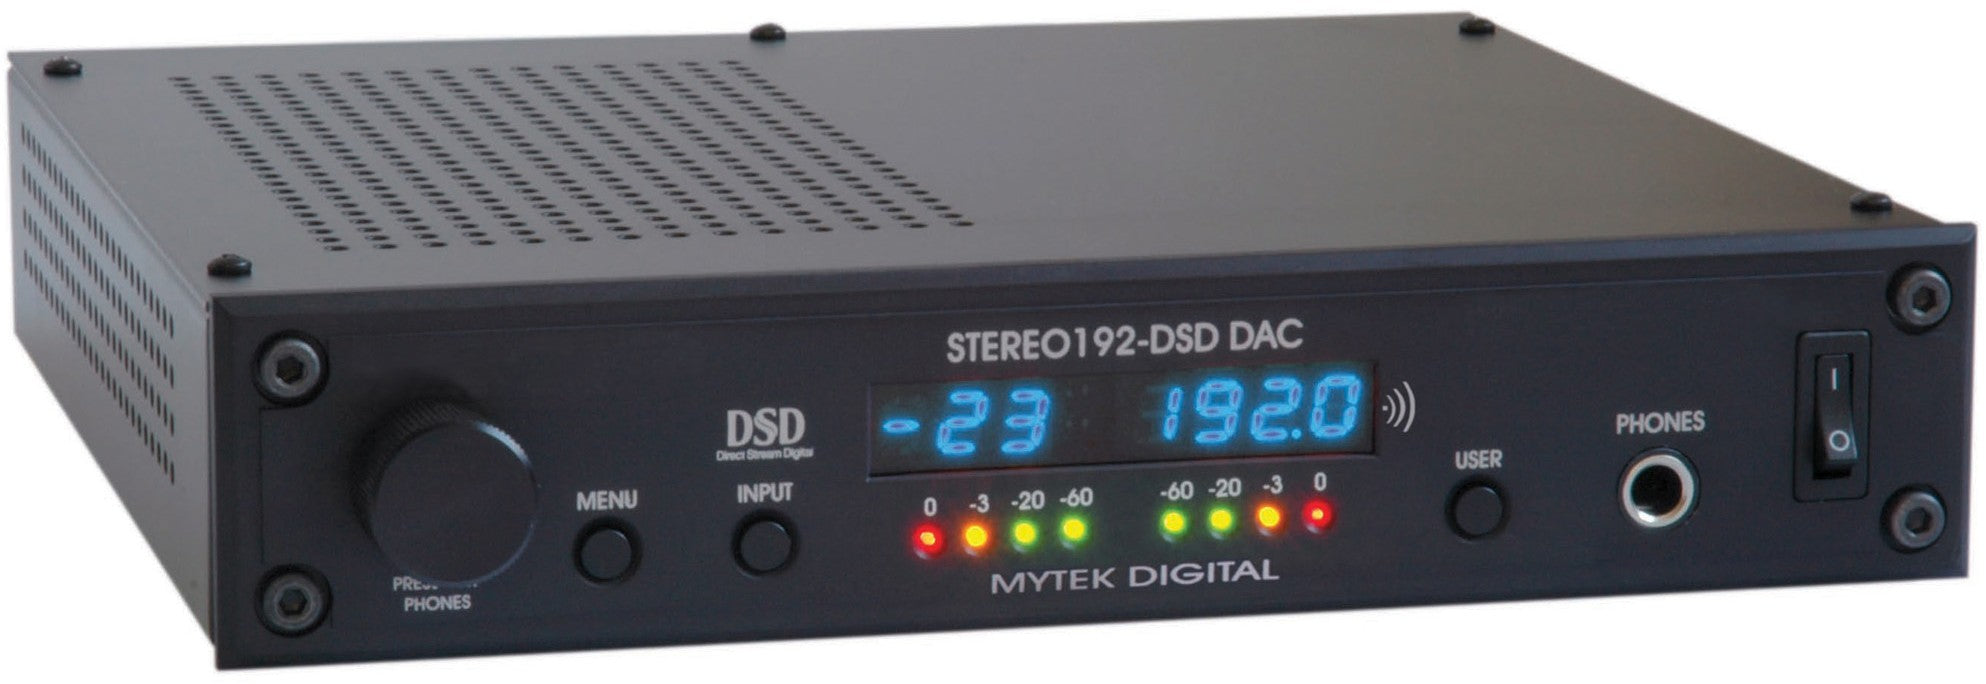 Mytek Digital Stereo192-DSD DAC Black Mastering Version – KMR Audio